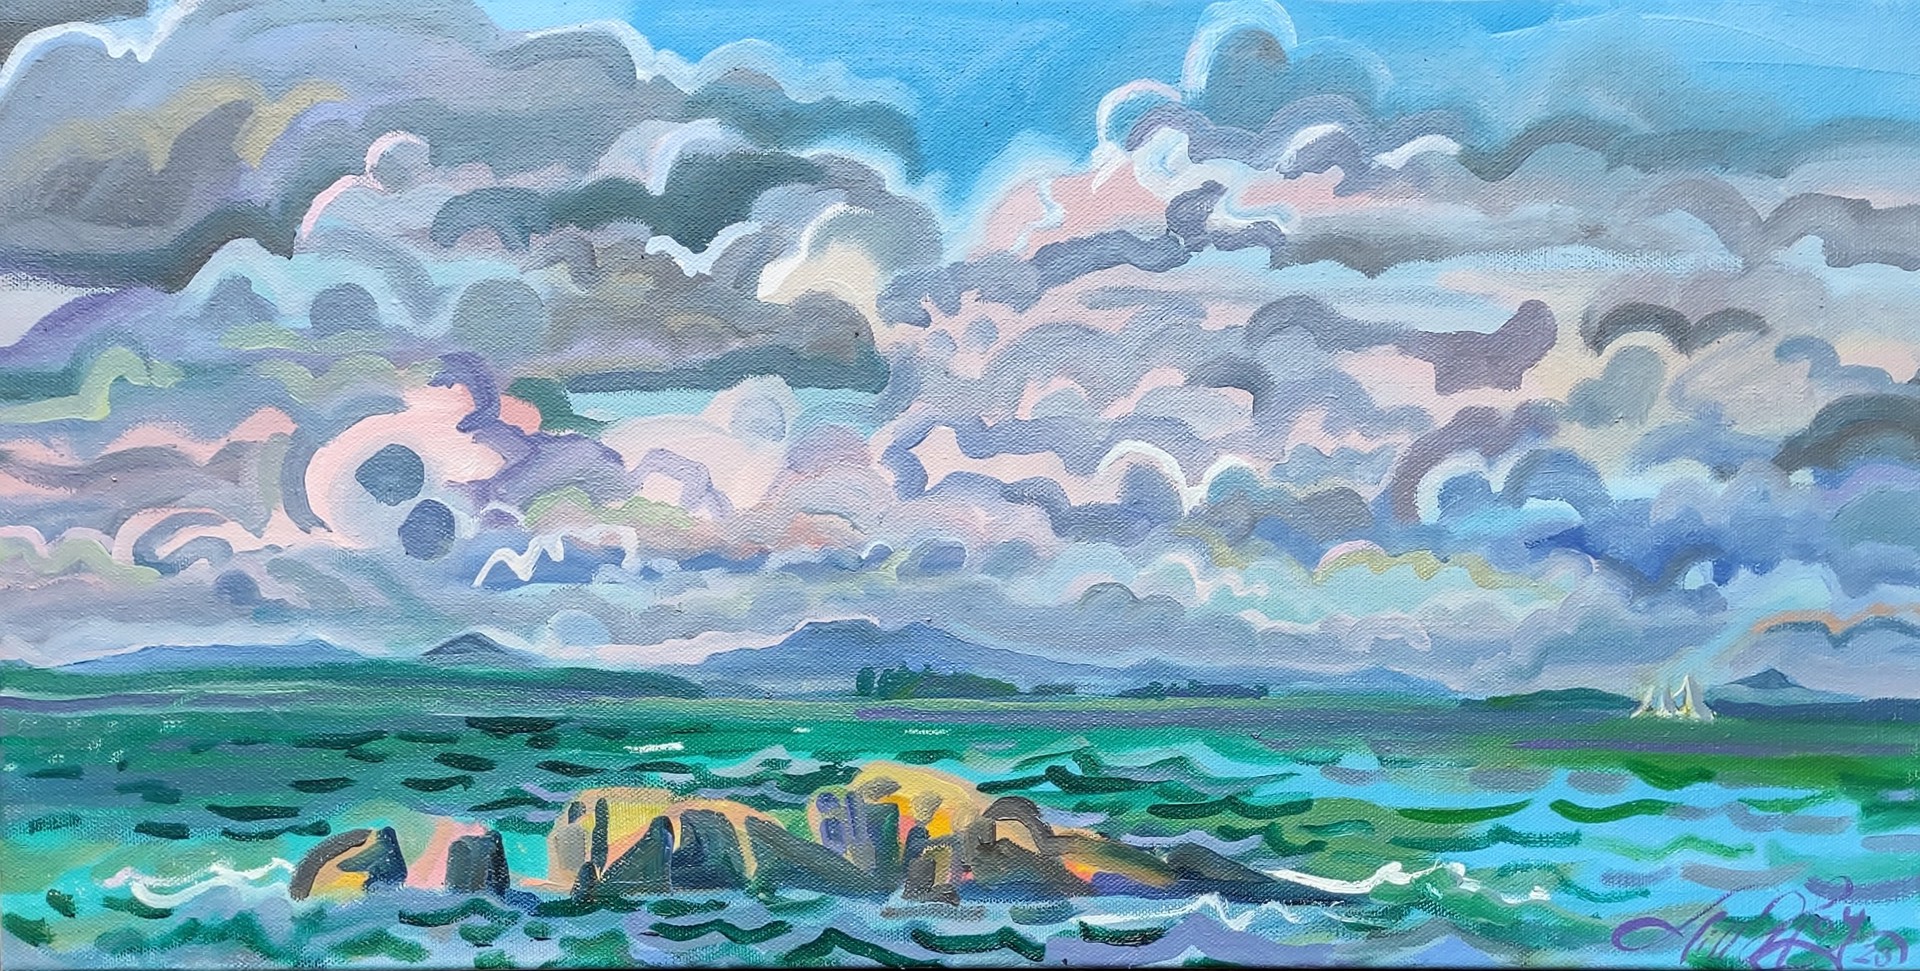 Penobscot Bay by Jill Hoy